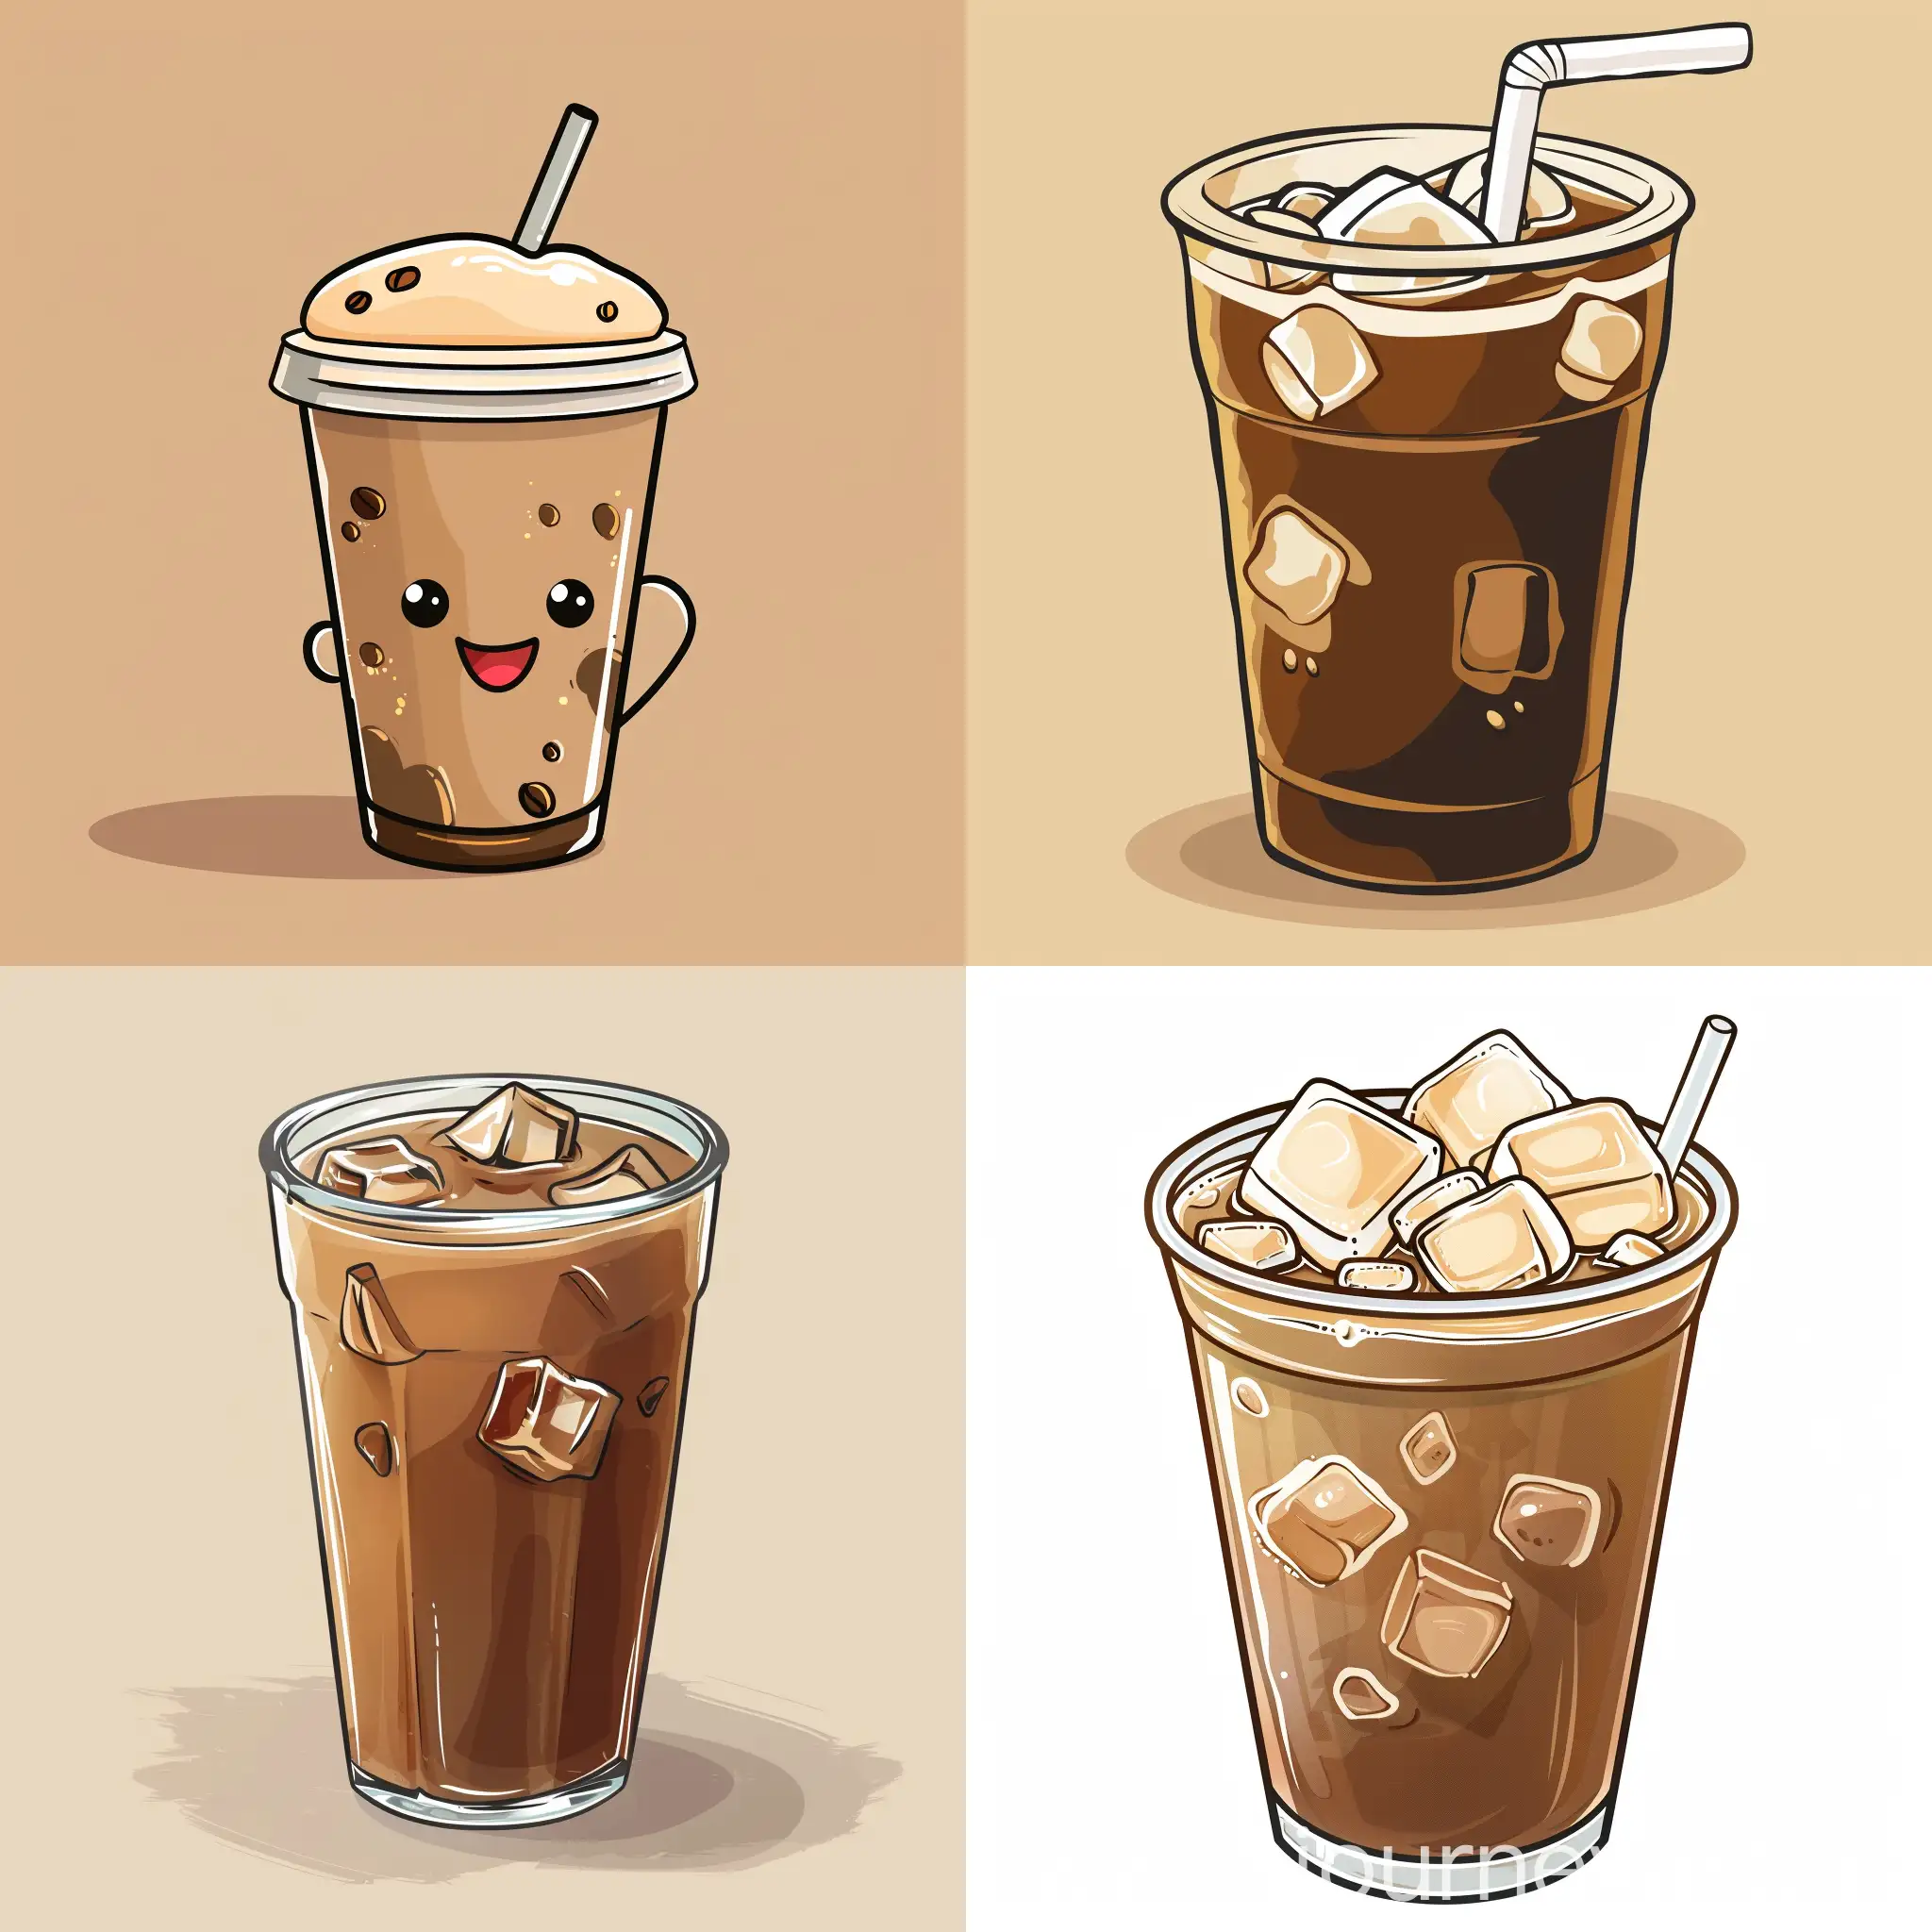 Cartoony iced coffee